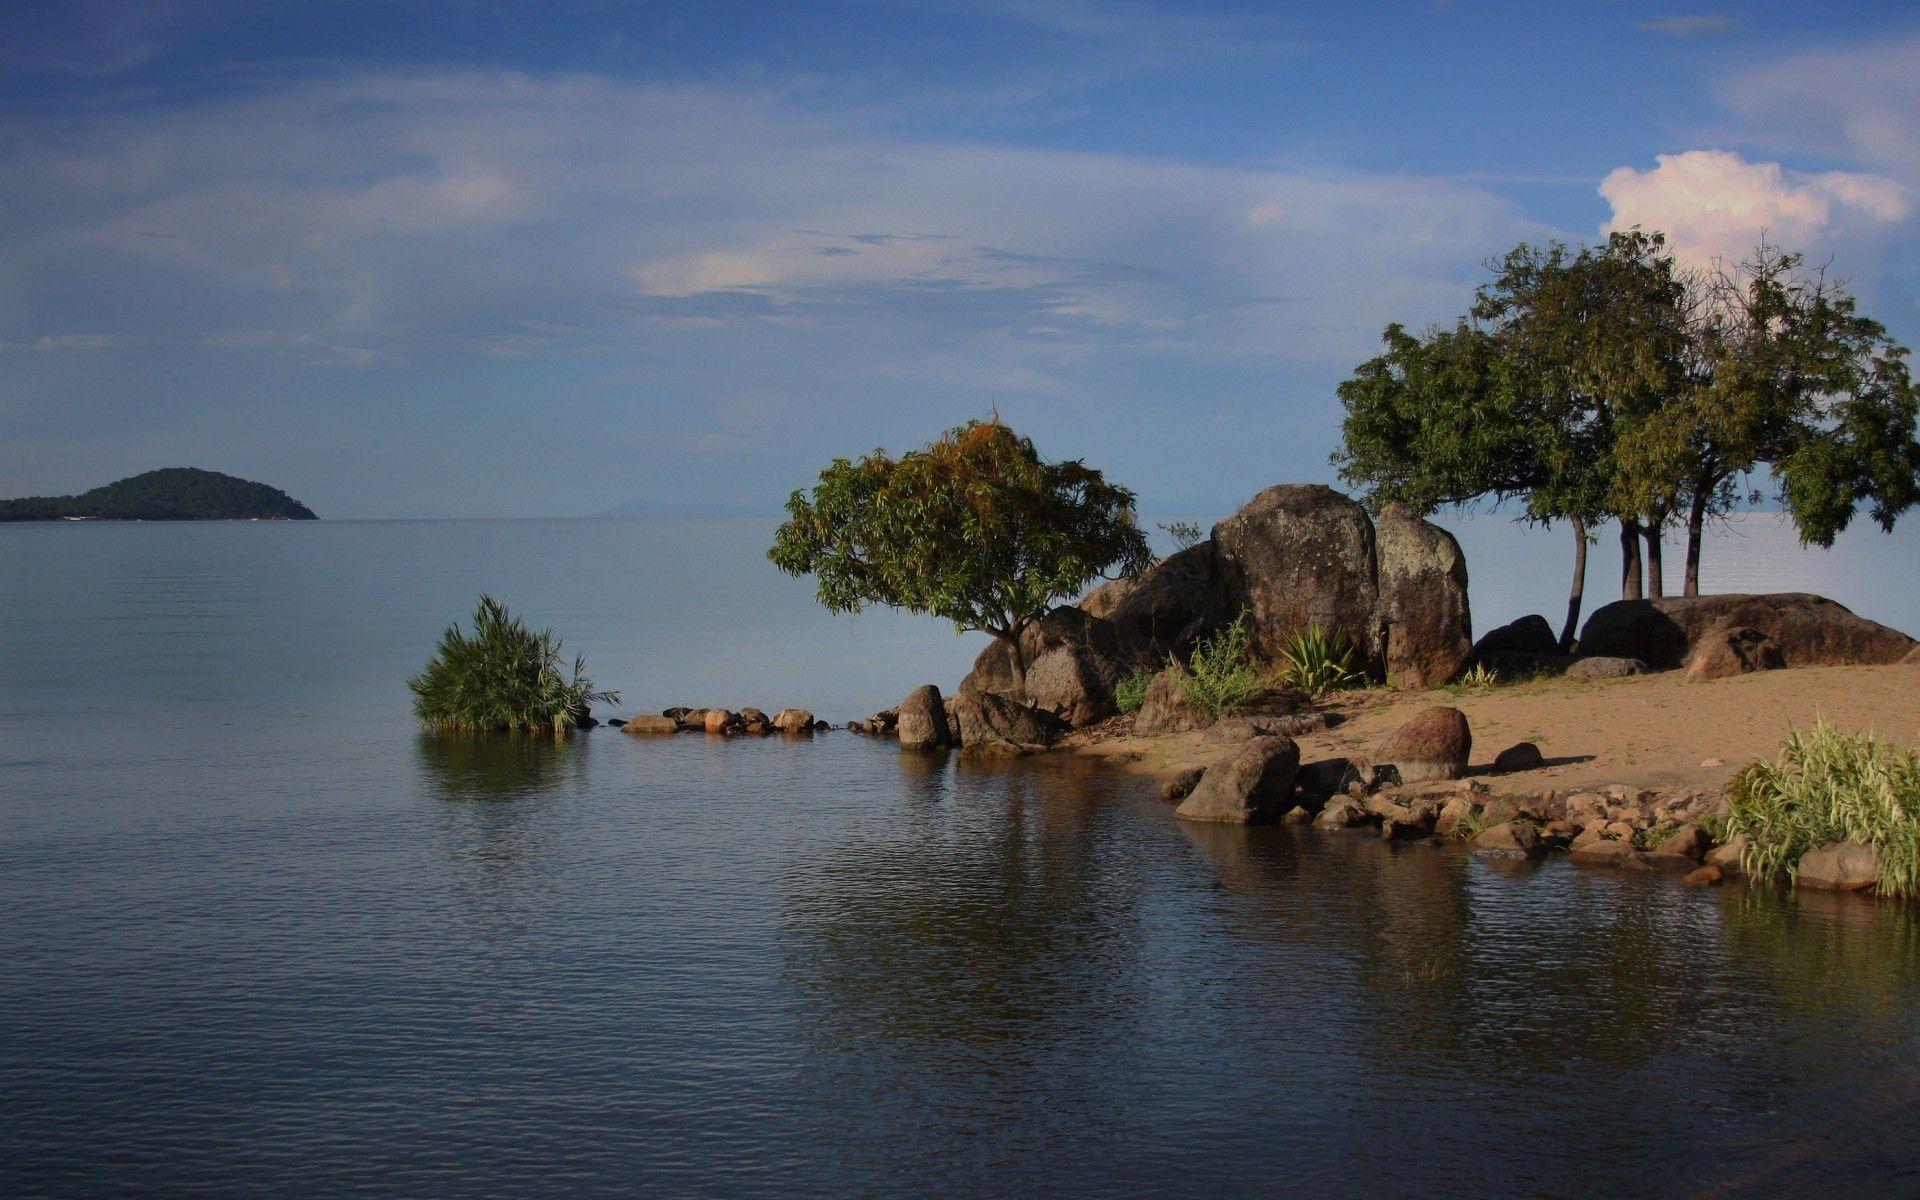 Lake Malawi East Africa wallpaper. Lake Malawi East Africa stock